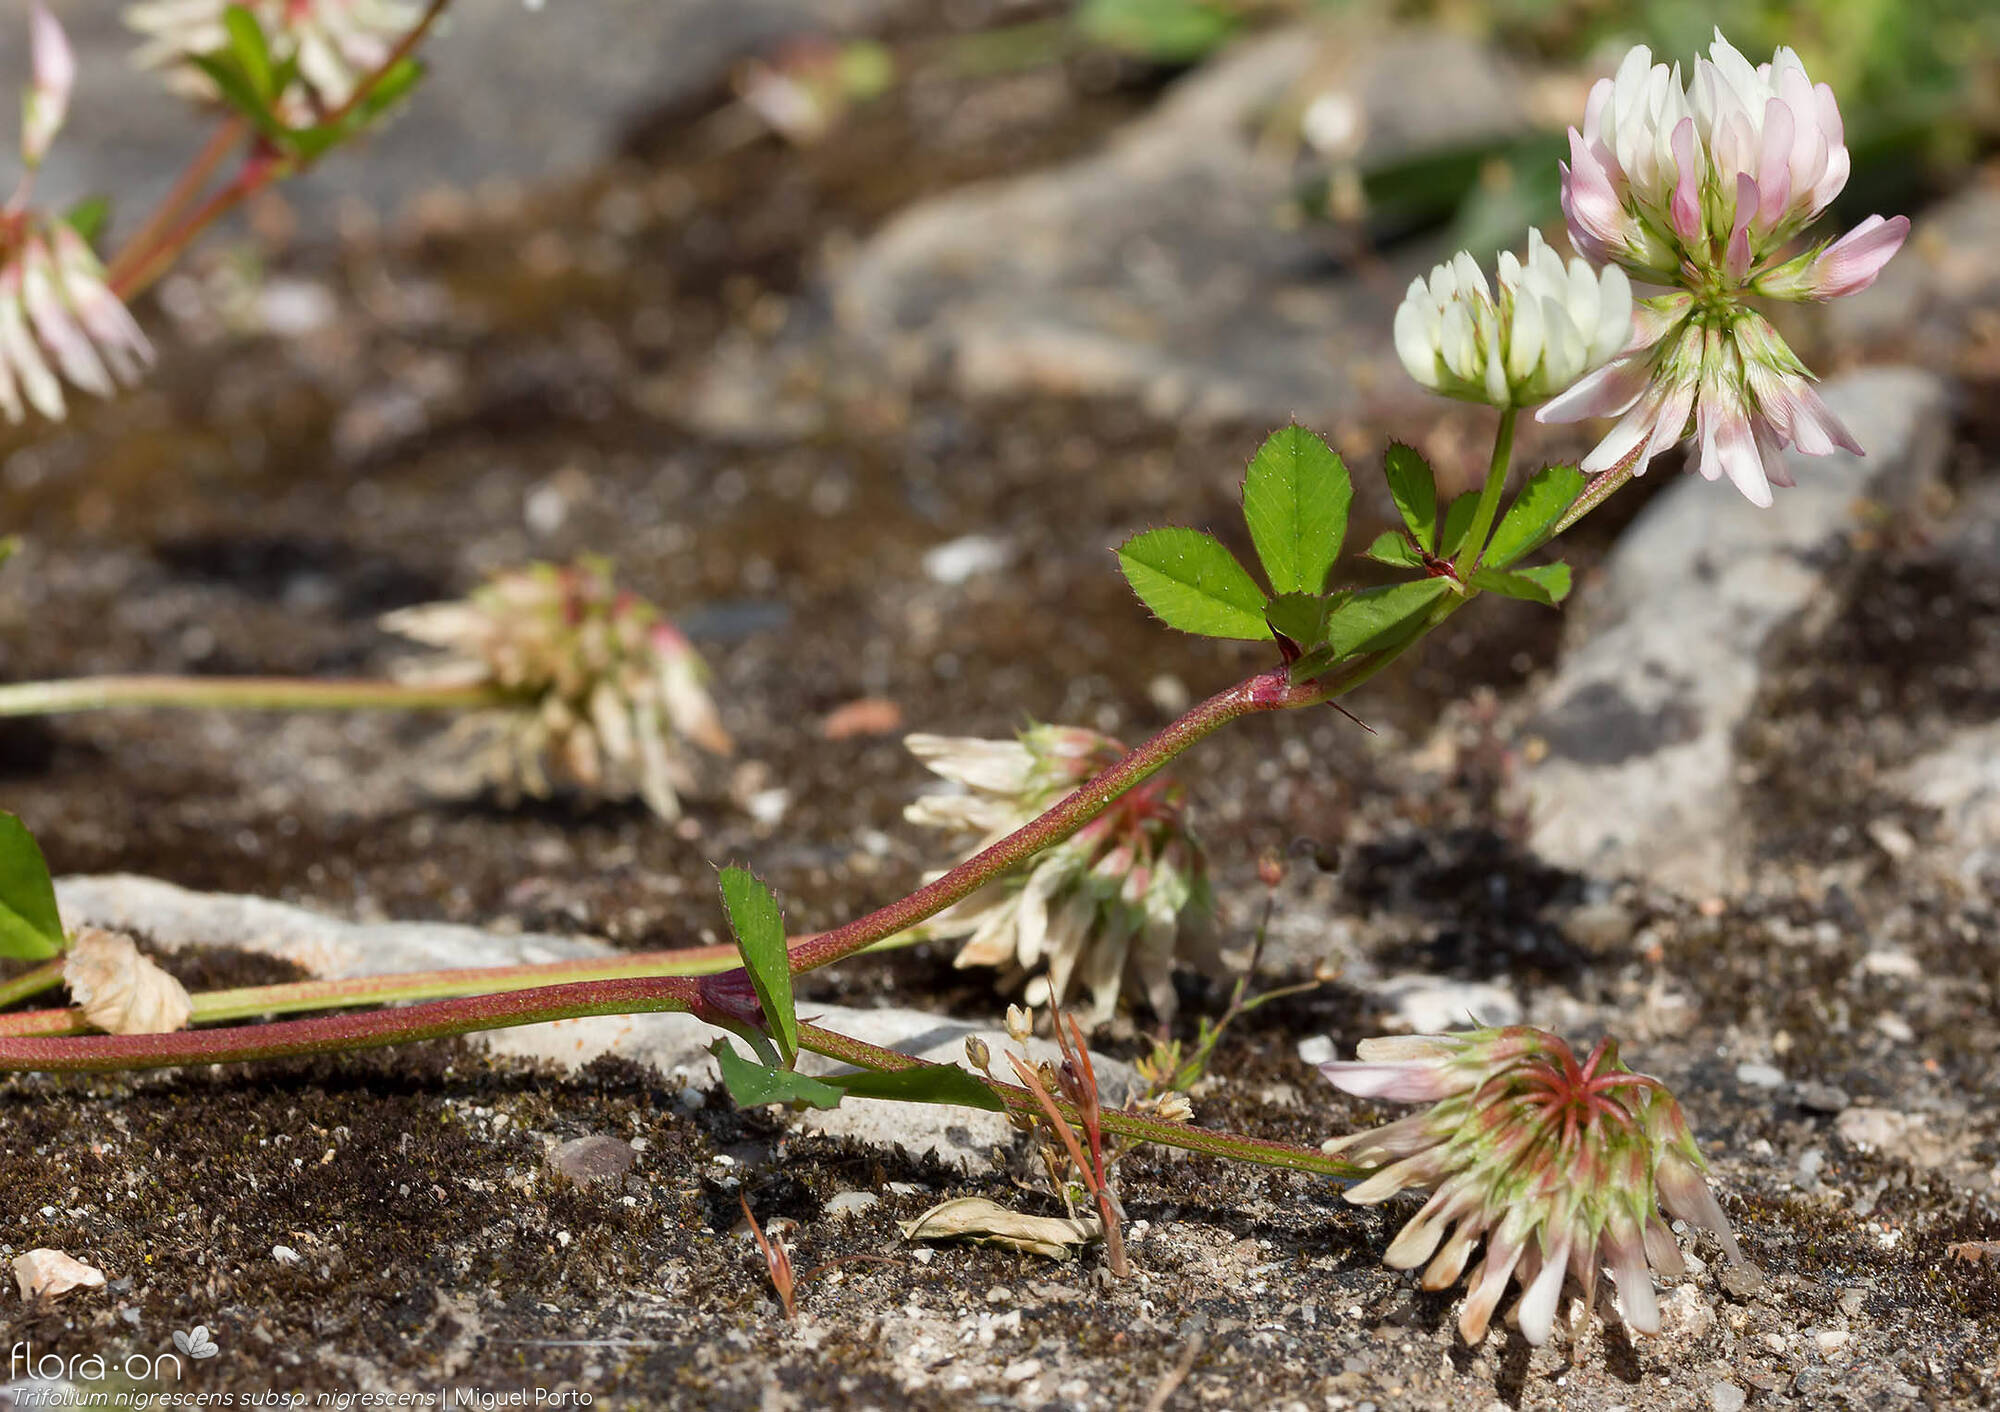 Trifolium nigrescens nigrescens - Flor (geral) | Miguel Porto; CC BY-NC 4.0